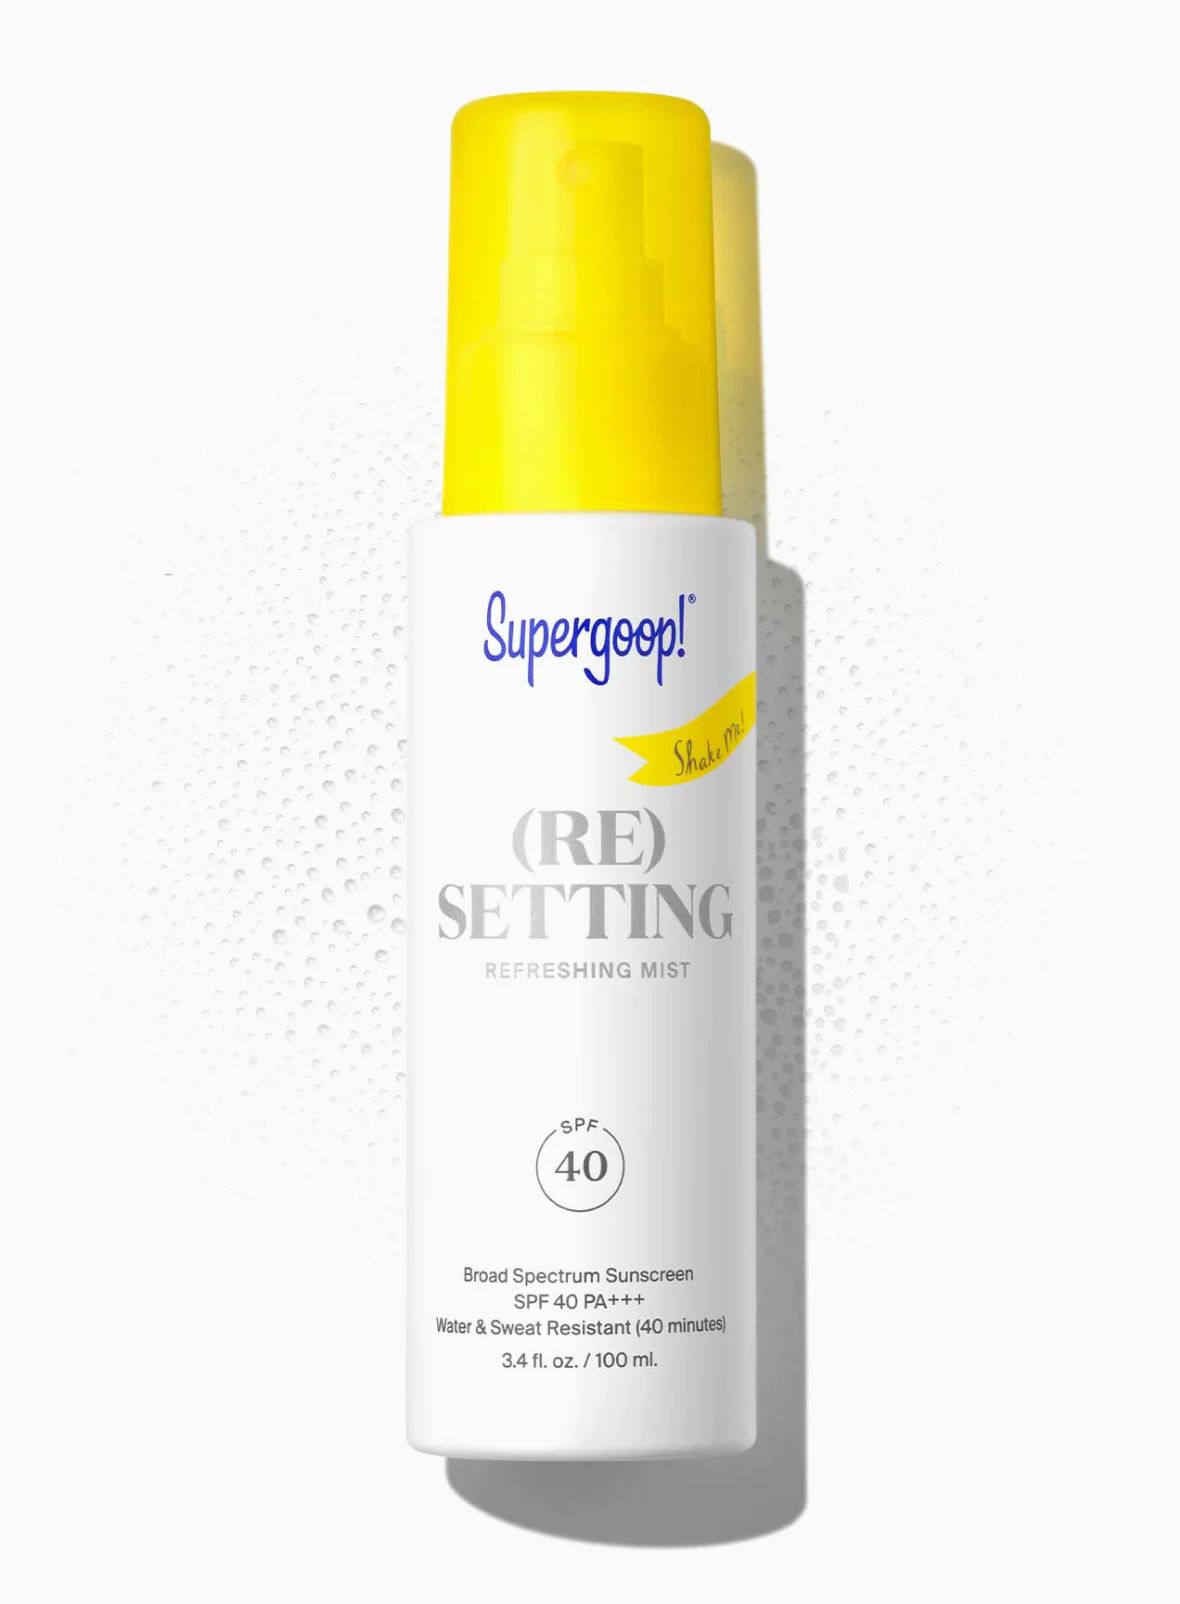 (Re)setting Refreshing Mist SPF 40 | Supergoop